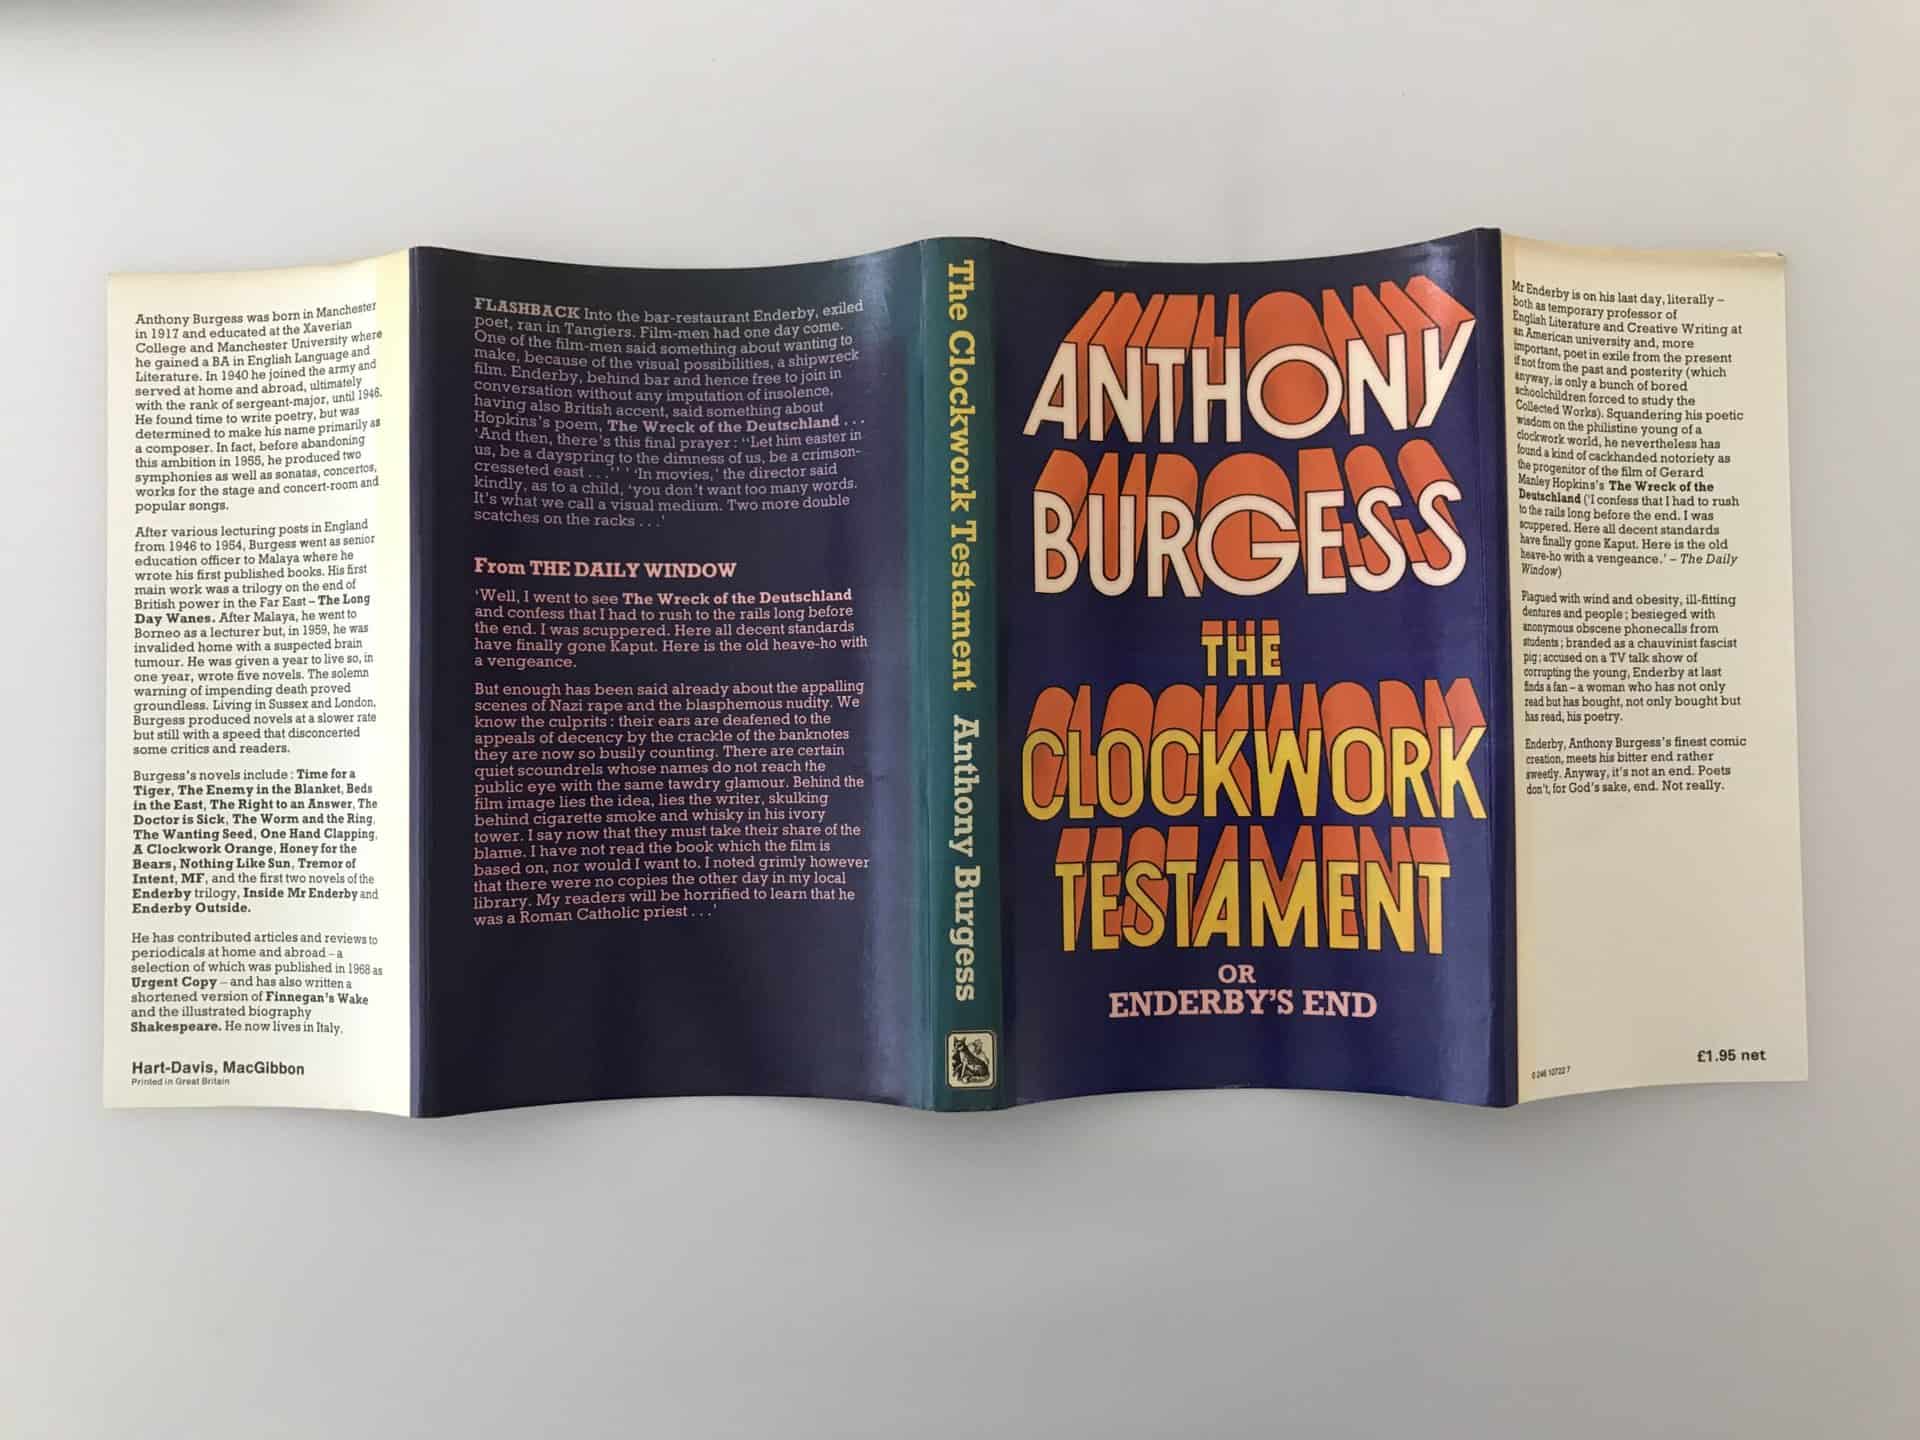 anthony burgess the clockwork testament first edition4